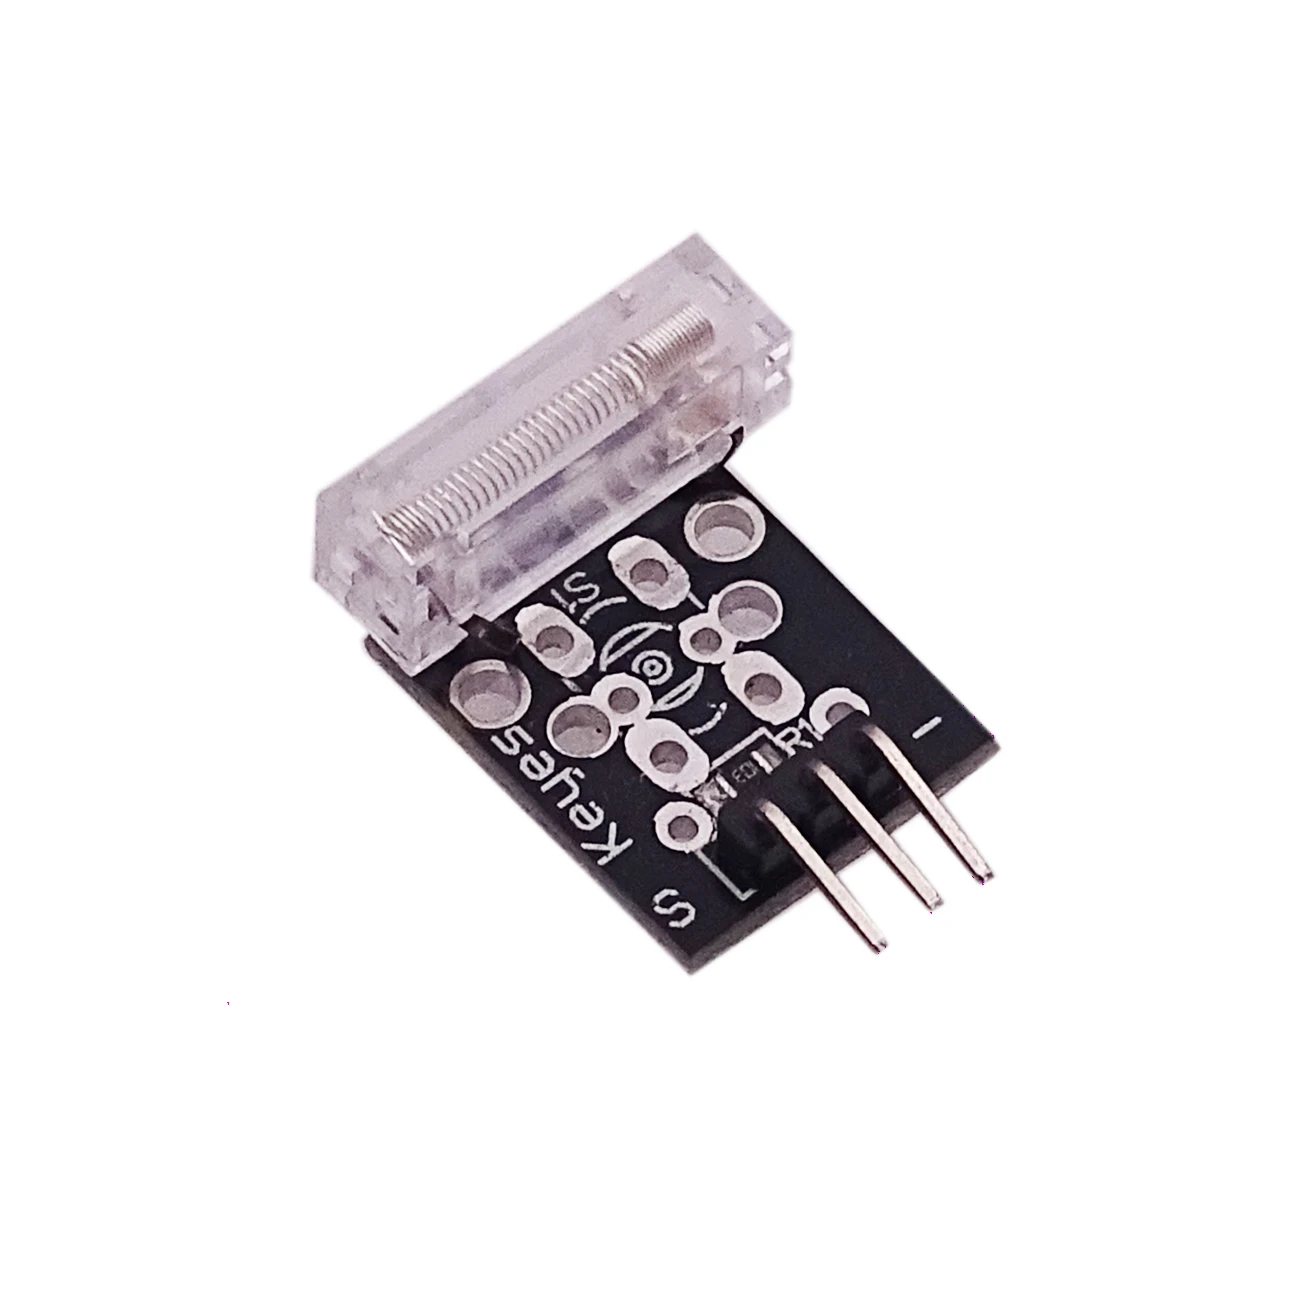 2PCS Lot KY-031 Knock Sensor Module with LED For Arduino PIC AVR Raspberry pi 